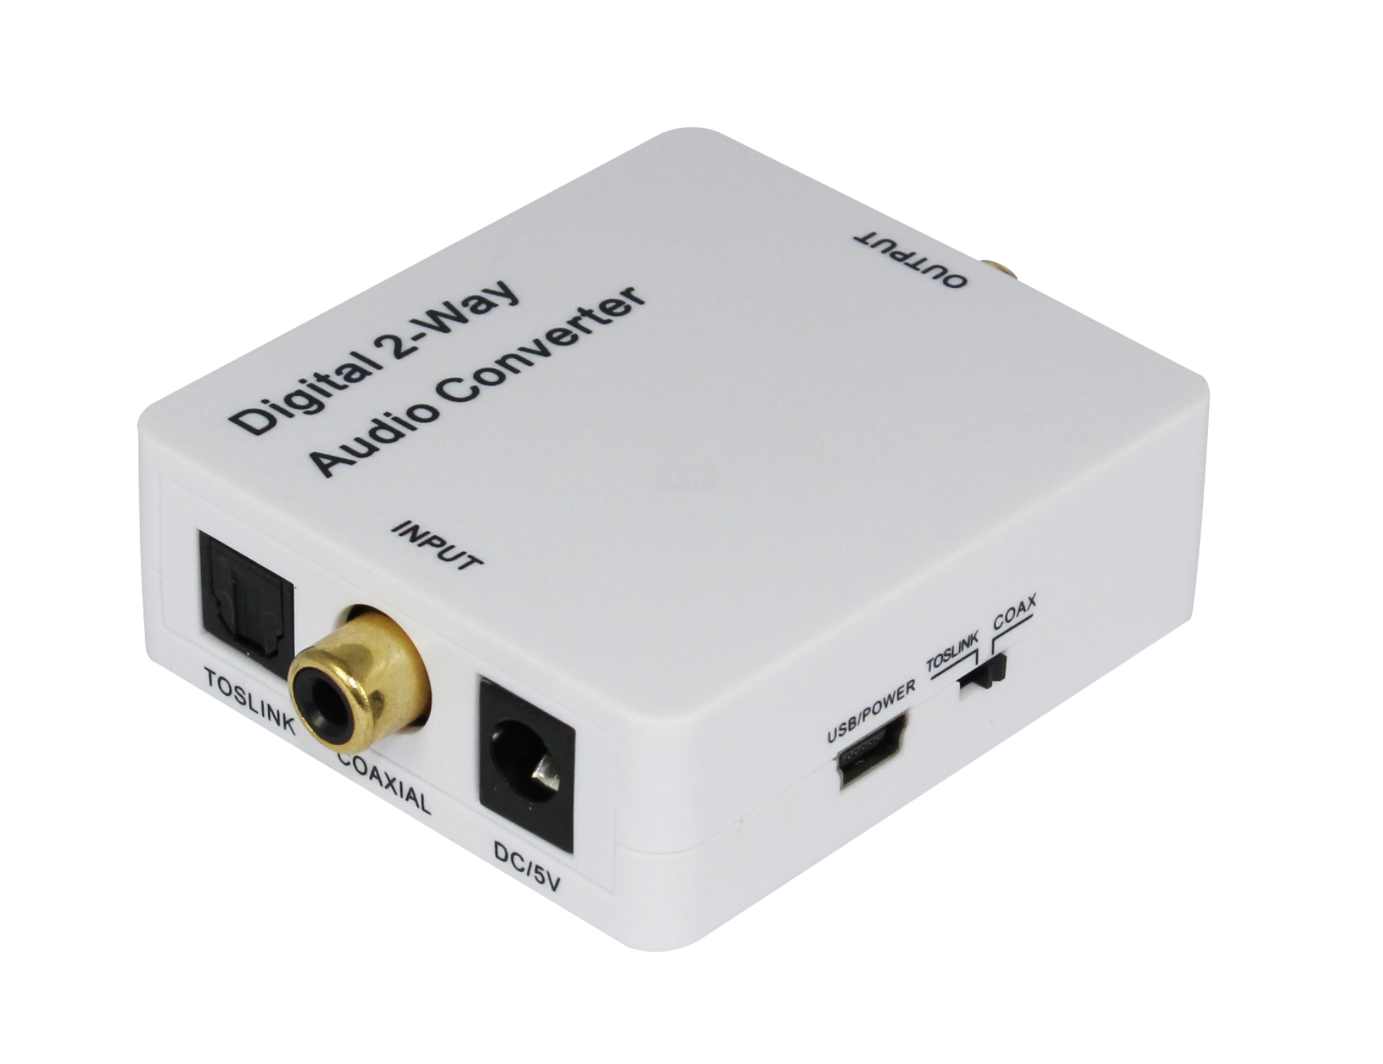 Digital S/PDIF to Stereo Analog RCA Audio Converter